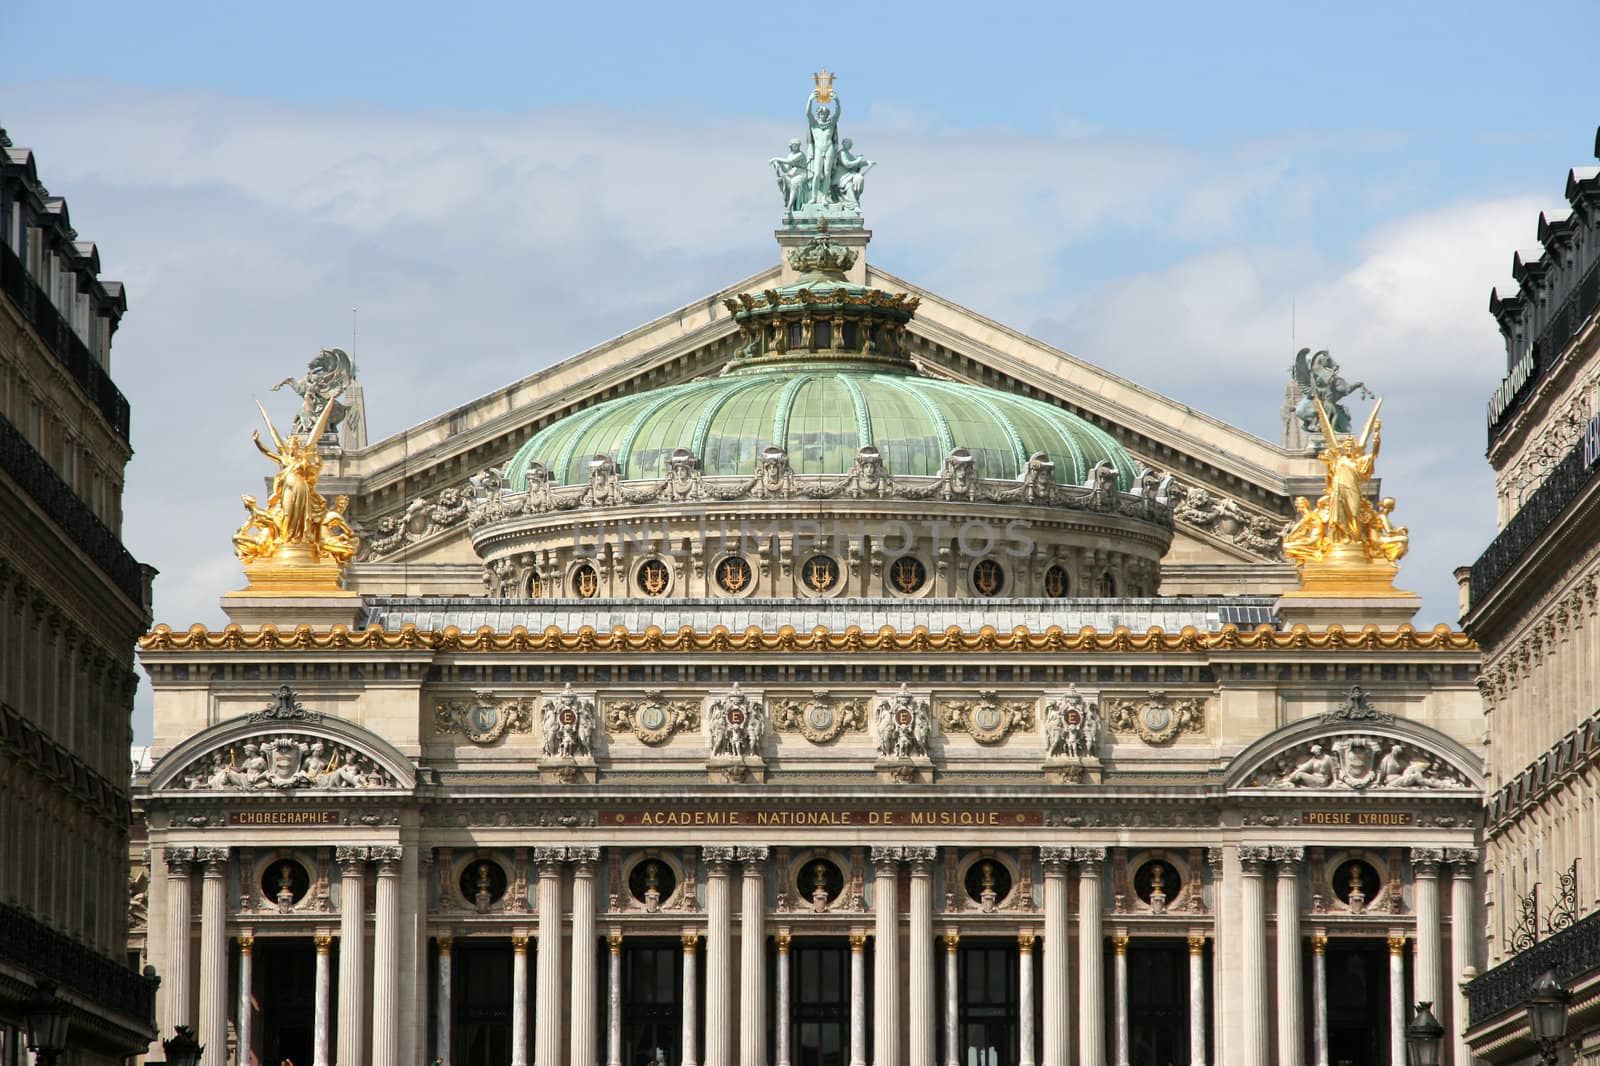 Opera National de Paris - Garnier Palace. Famous neo-baroque opera building in Paris, France